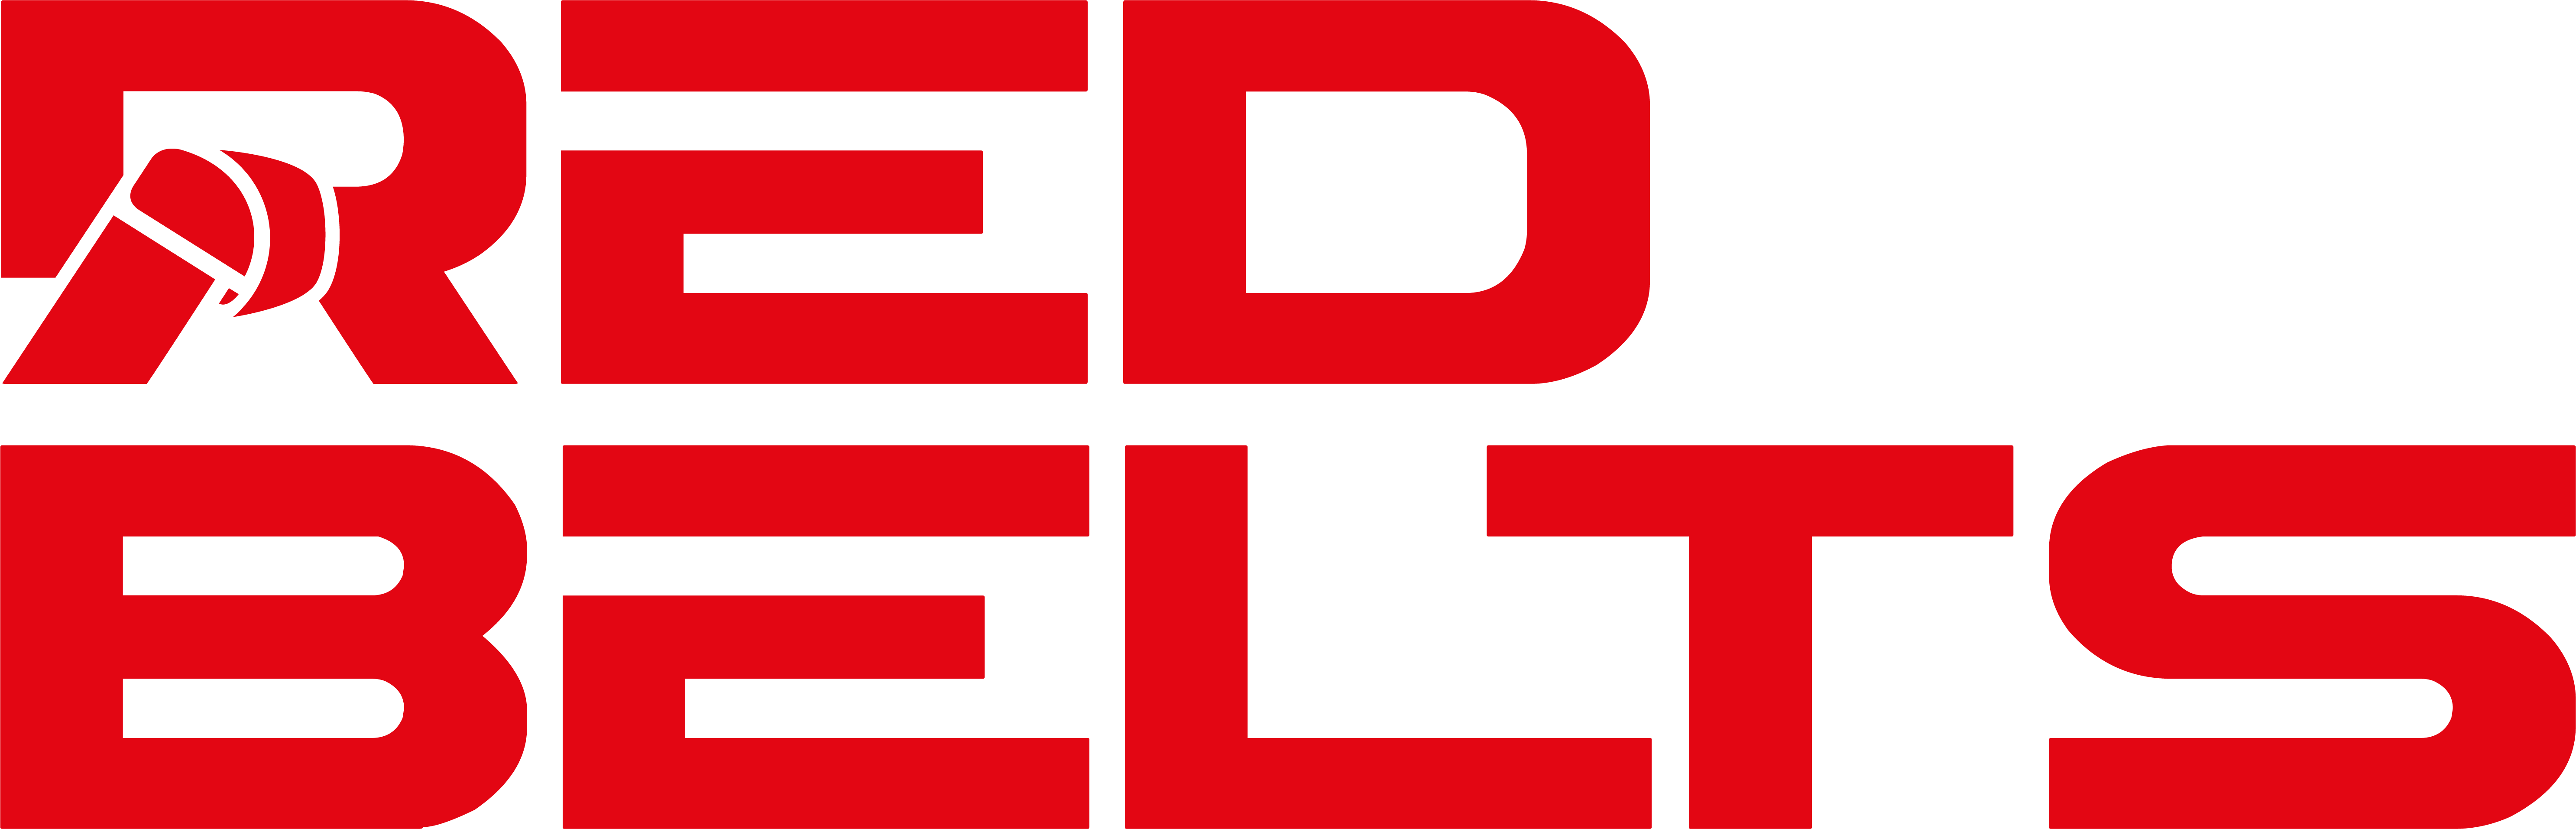 RedBelt logo